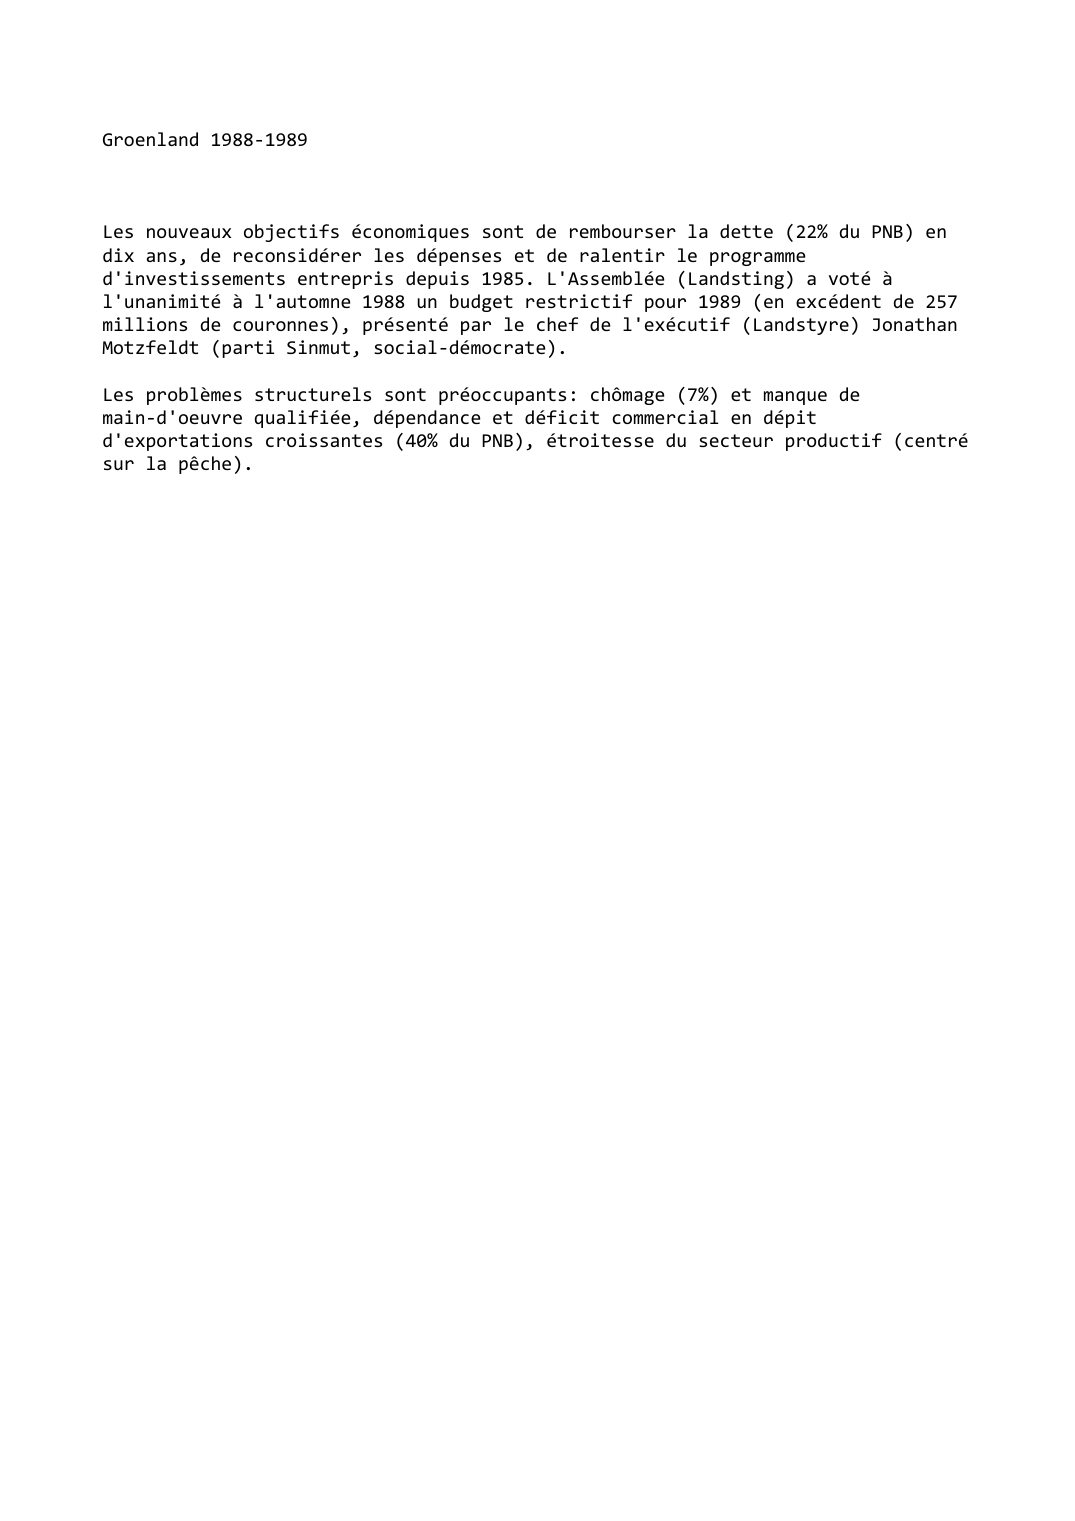 Prévisualisation du document Groenland (1988-1989)